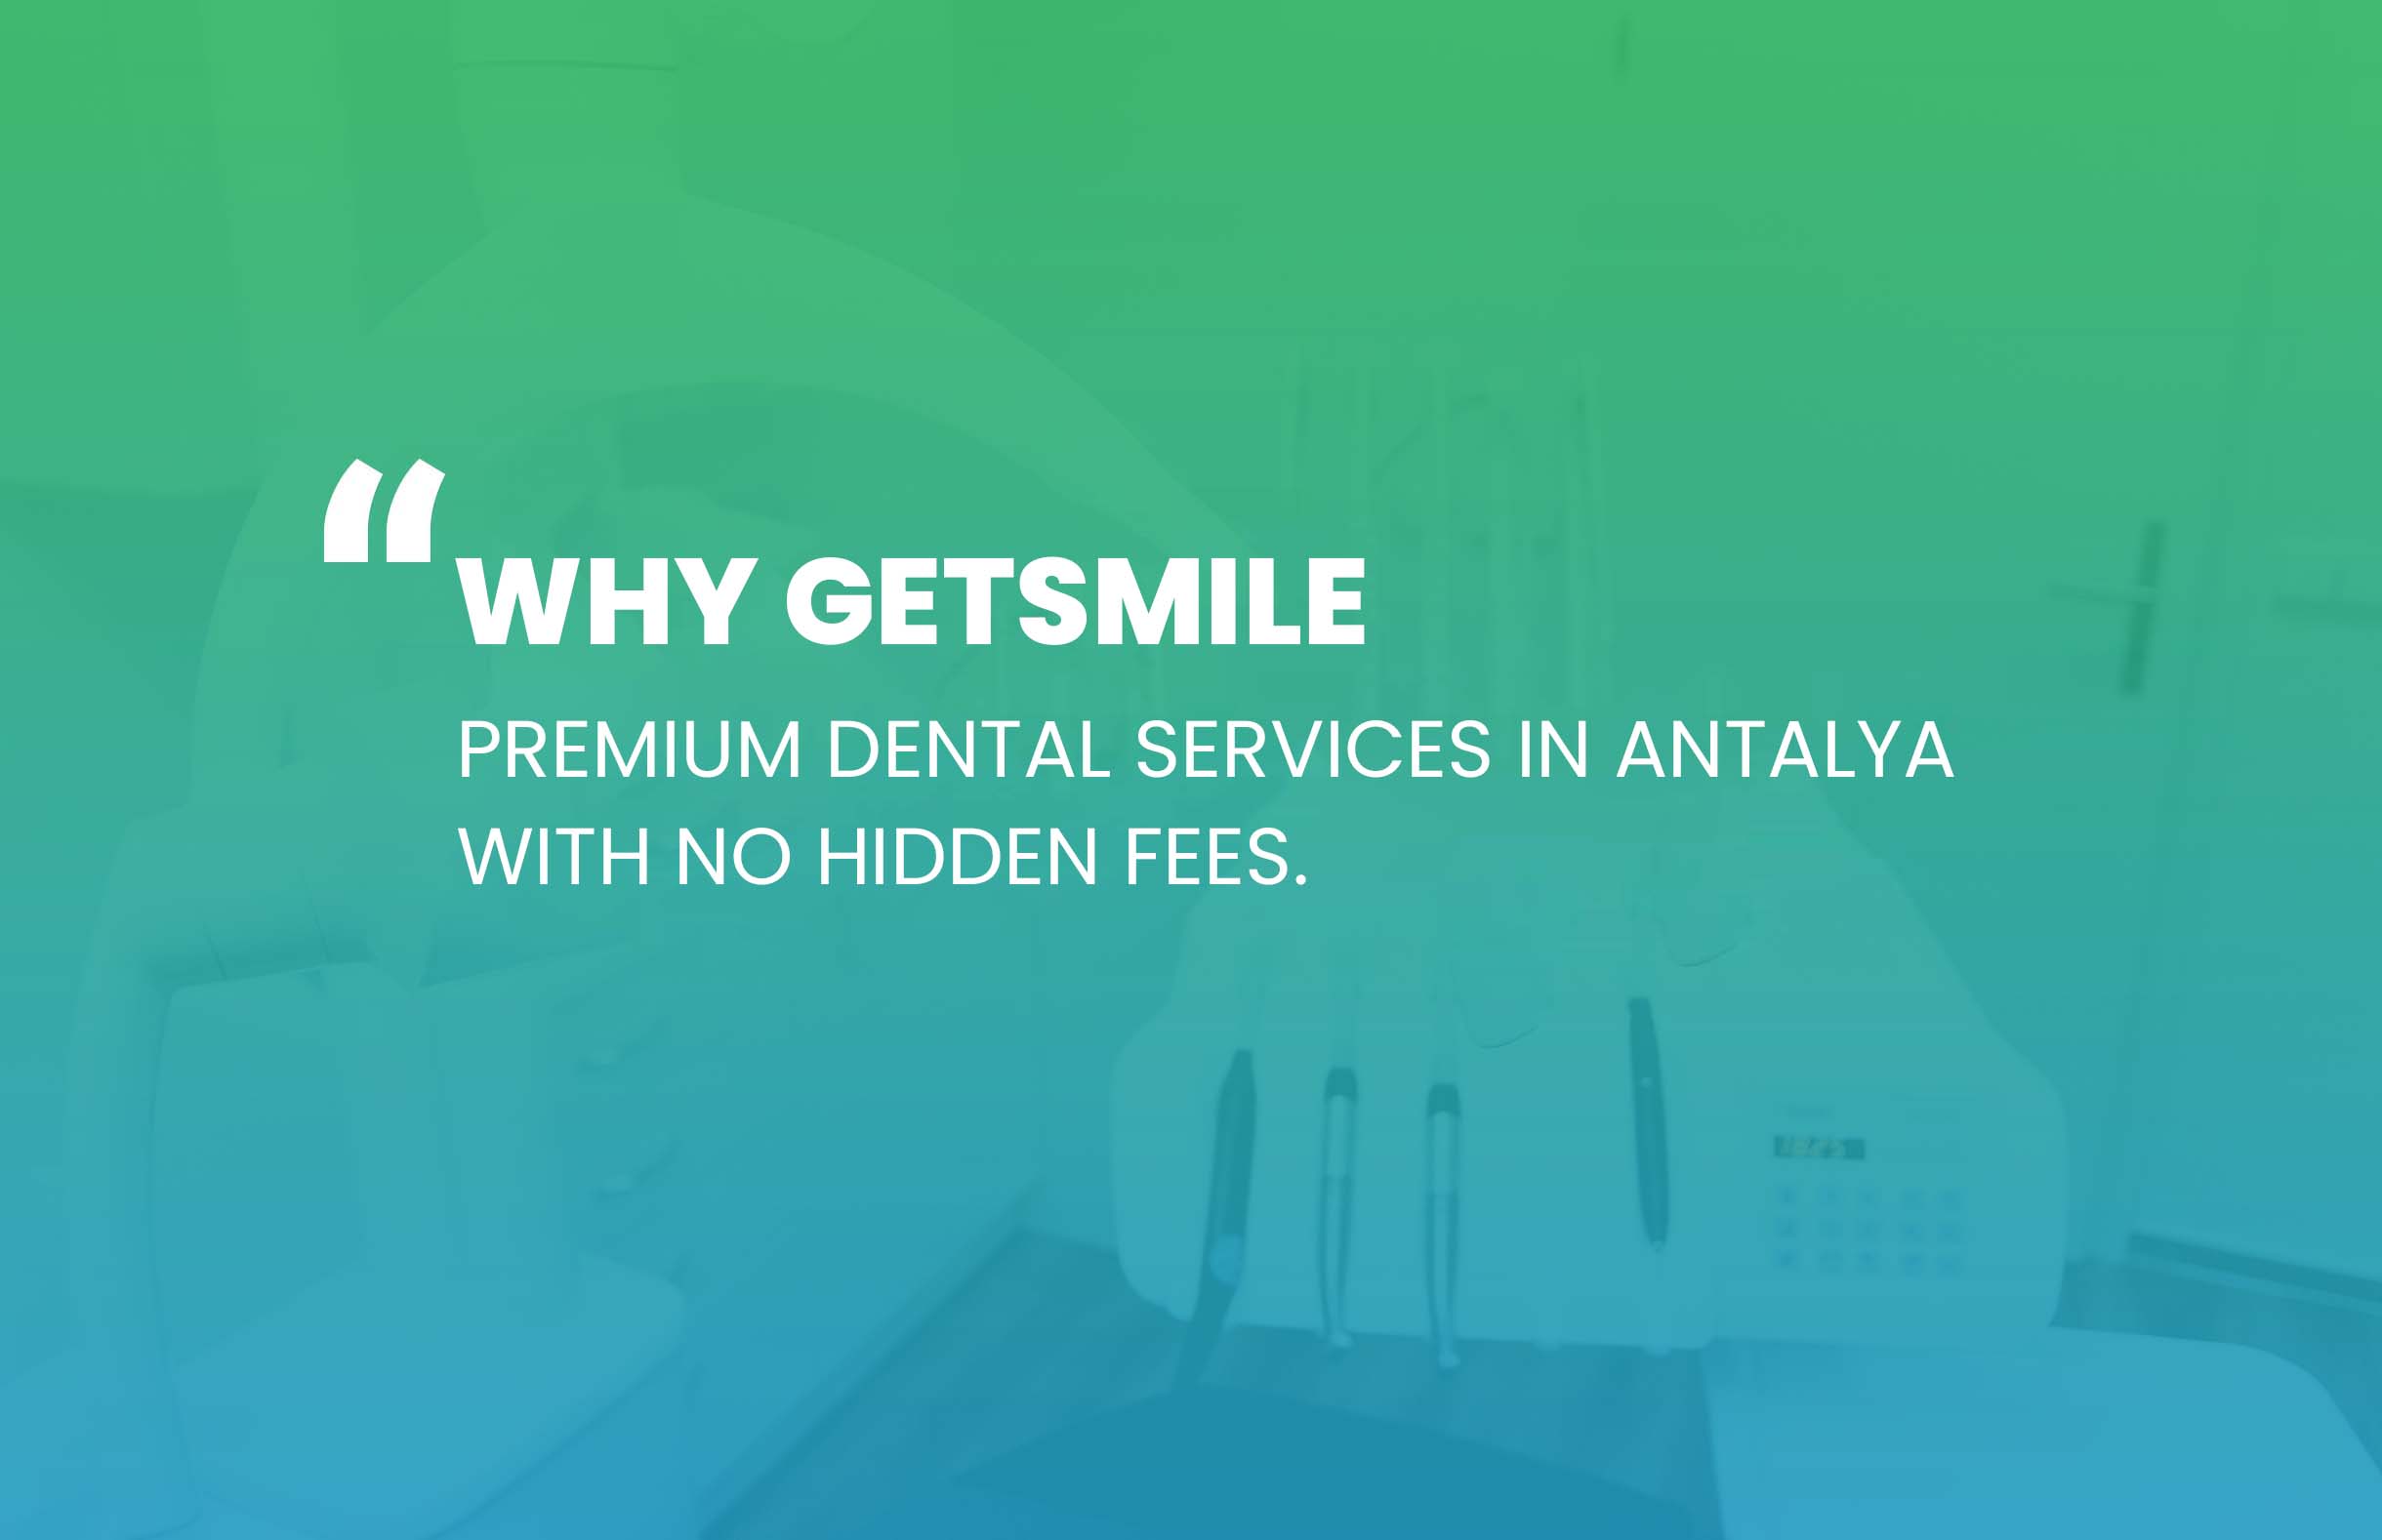 Premium Dental Medicine At Affordable Prices